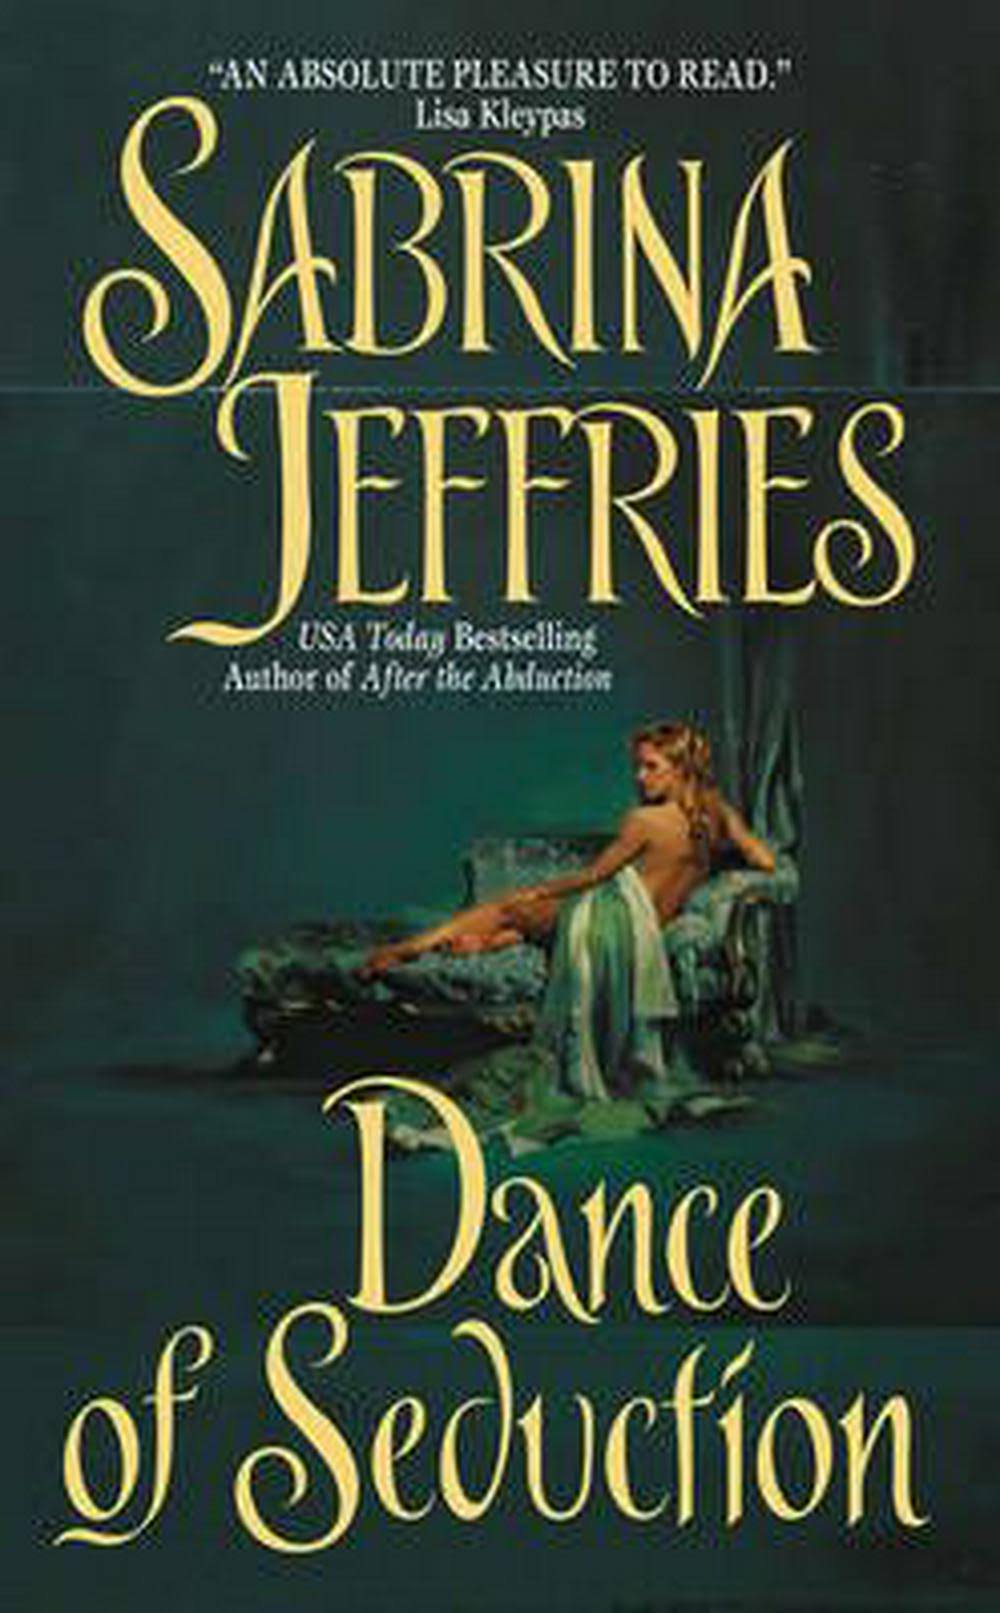 Dance of Seduction [Book]